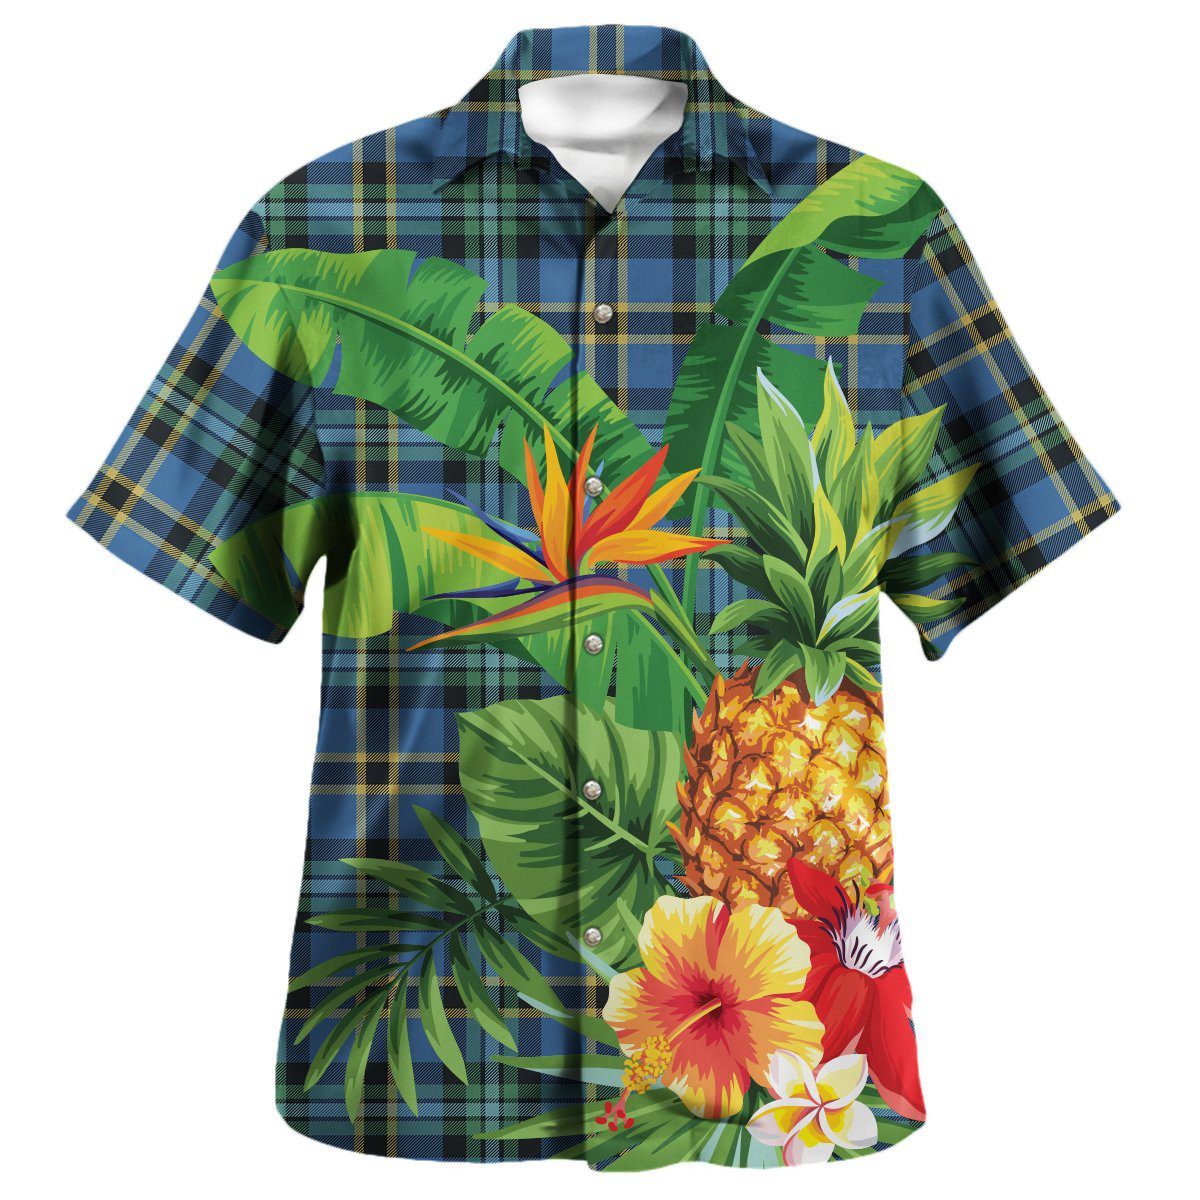 Weir Ancient Tartan Aloha Shirt version 2